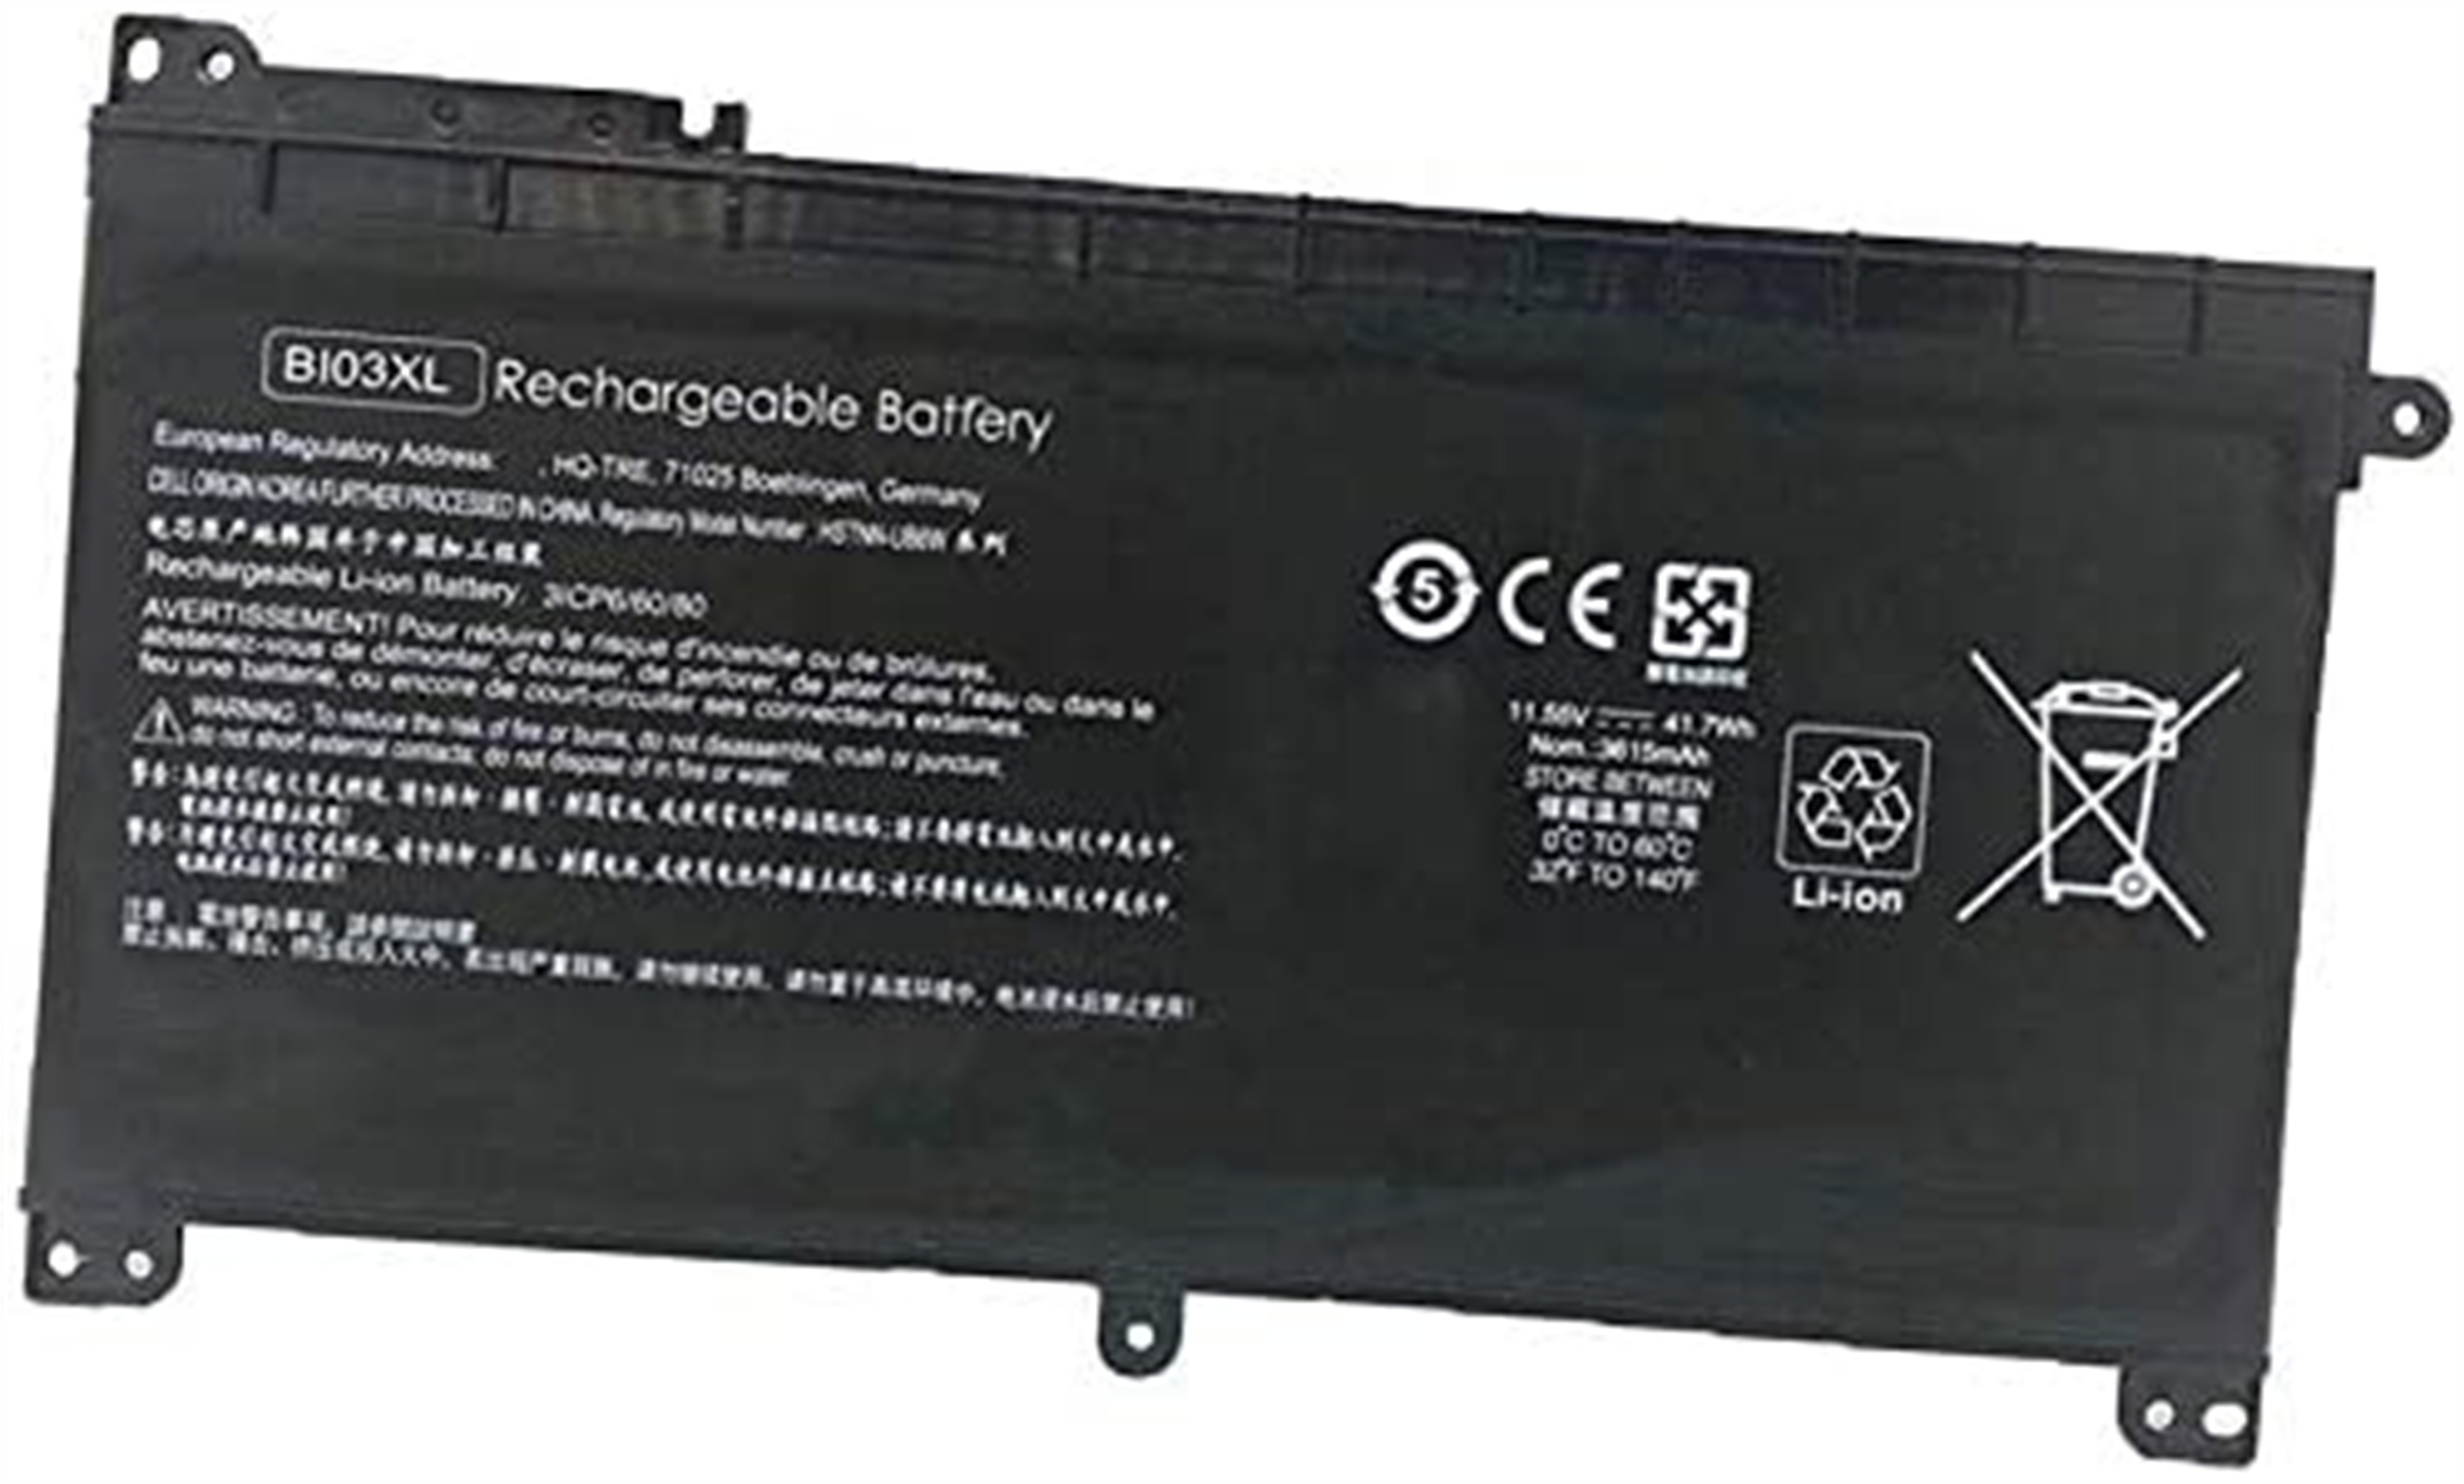 BI03XL rechargeable lithium ion Notebook battery Laptop battery 11.55 41.7Wh for HP laptop Pavilion X360 M3-U 13-U M3-U001DX 13-U118TU Stream TPN-W118 HSTNN-LB7P HSTNN-UB6W 843537-541